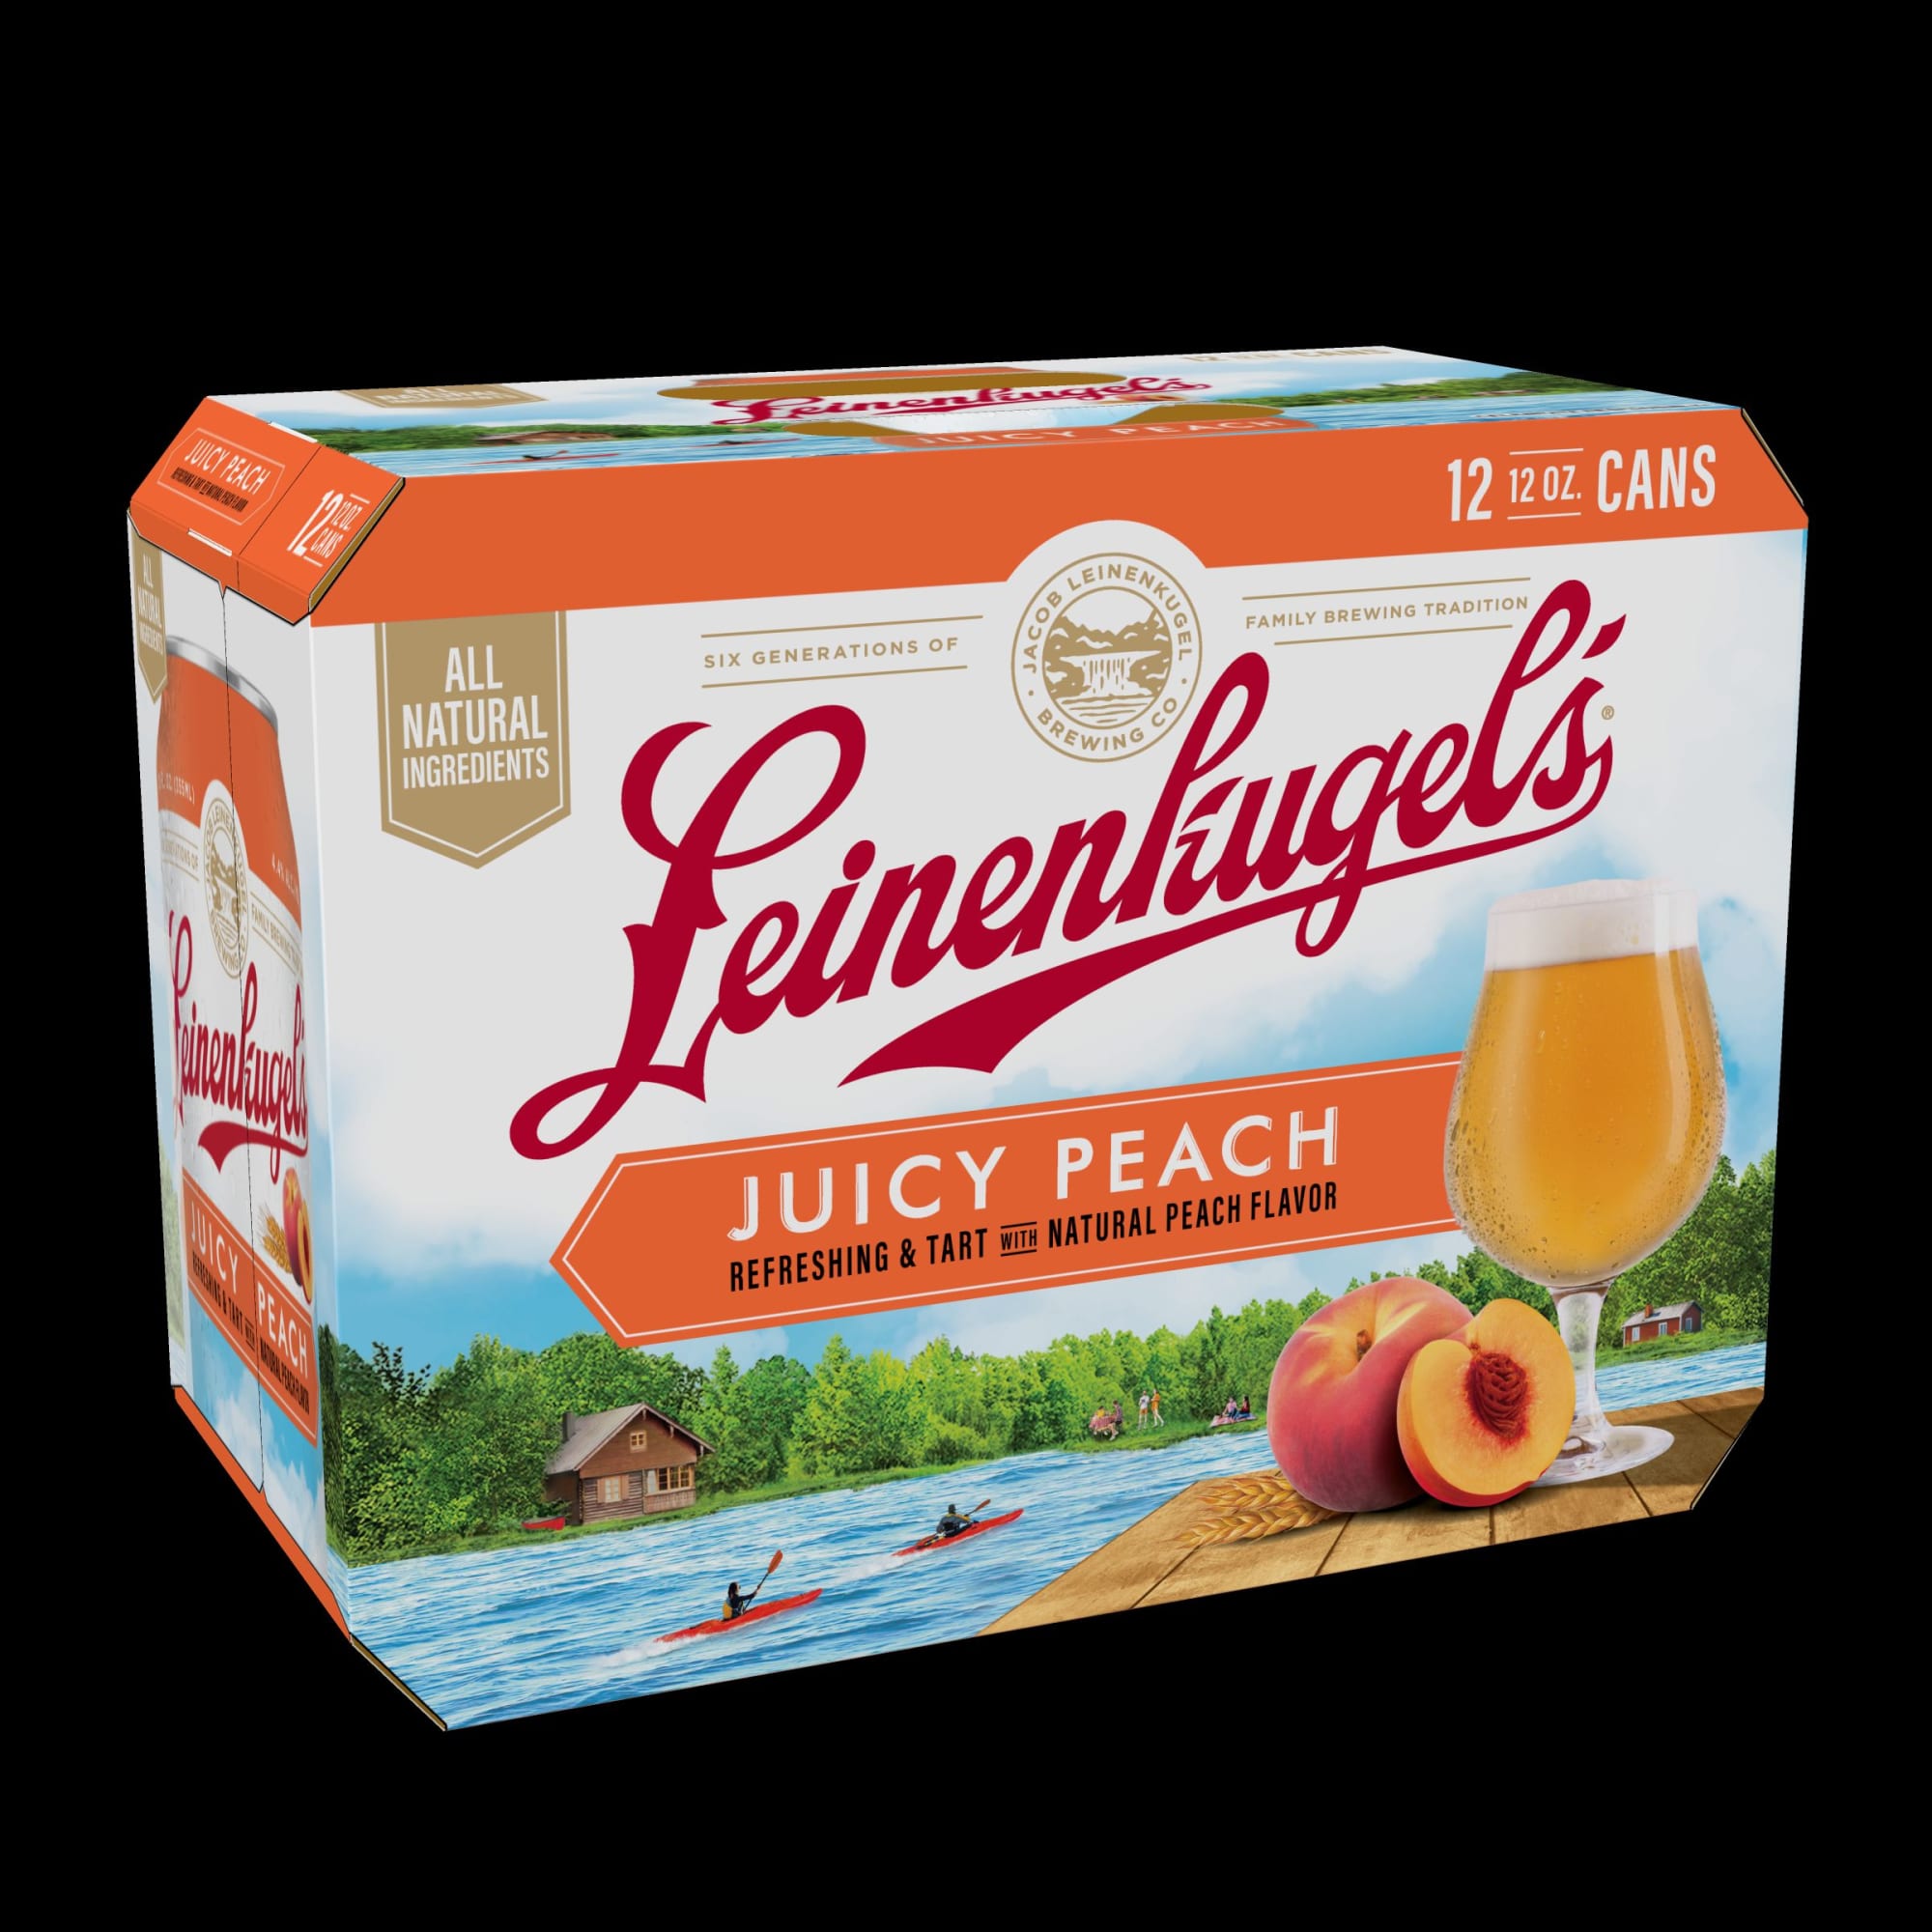 leinenkugel-s-juicy-peach-takes-the-wisconsin-beer-in-new-flavor-direction